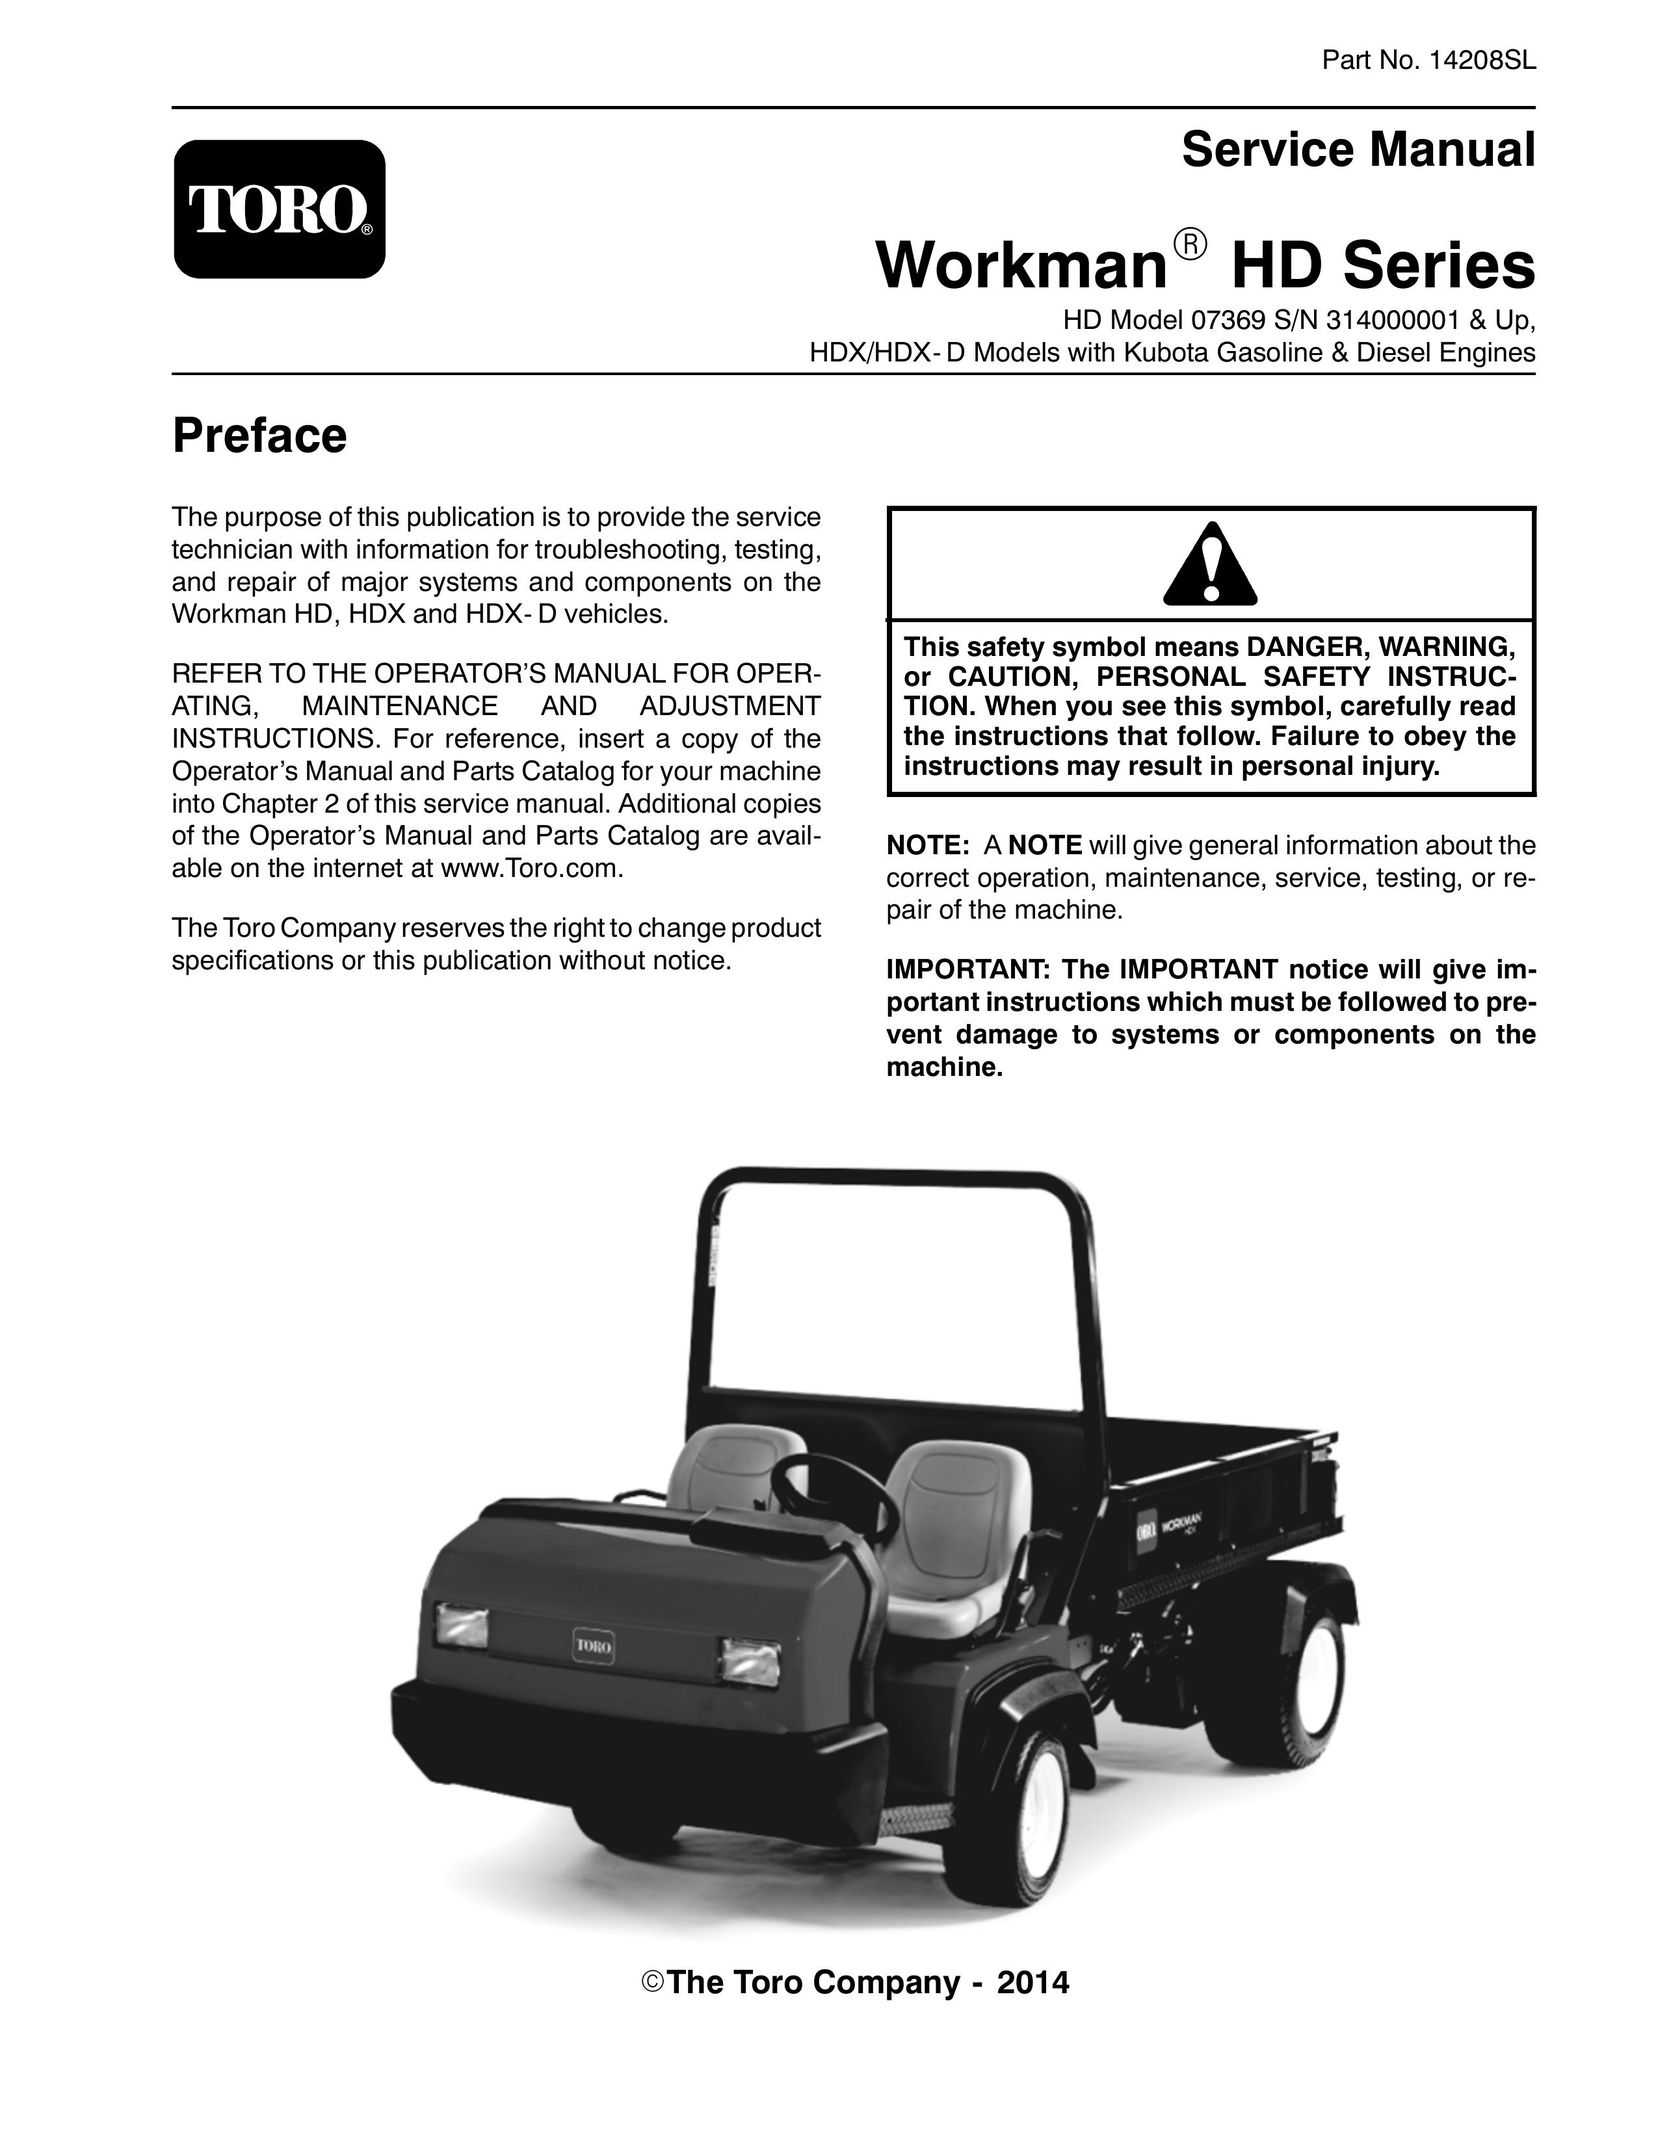 Toro HD 07369 S?N 3140000001 & up Work Light User Manual